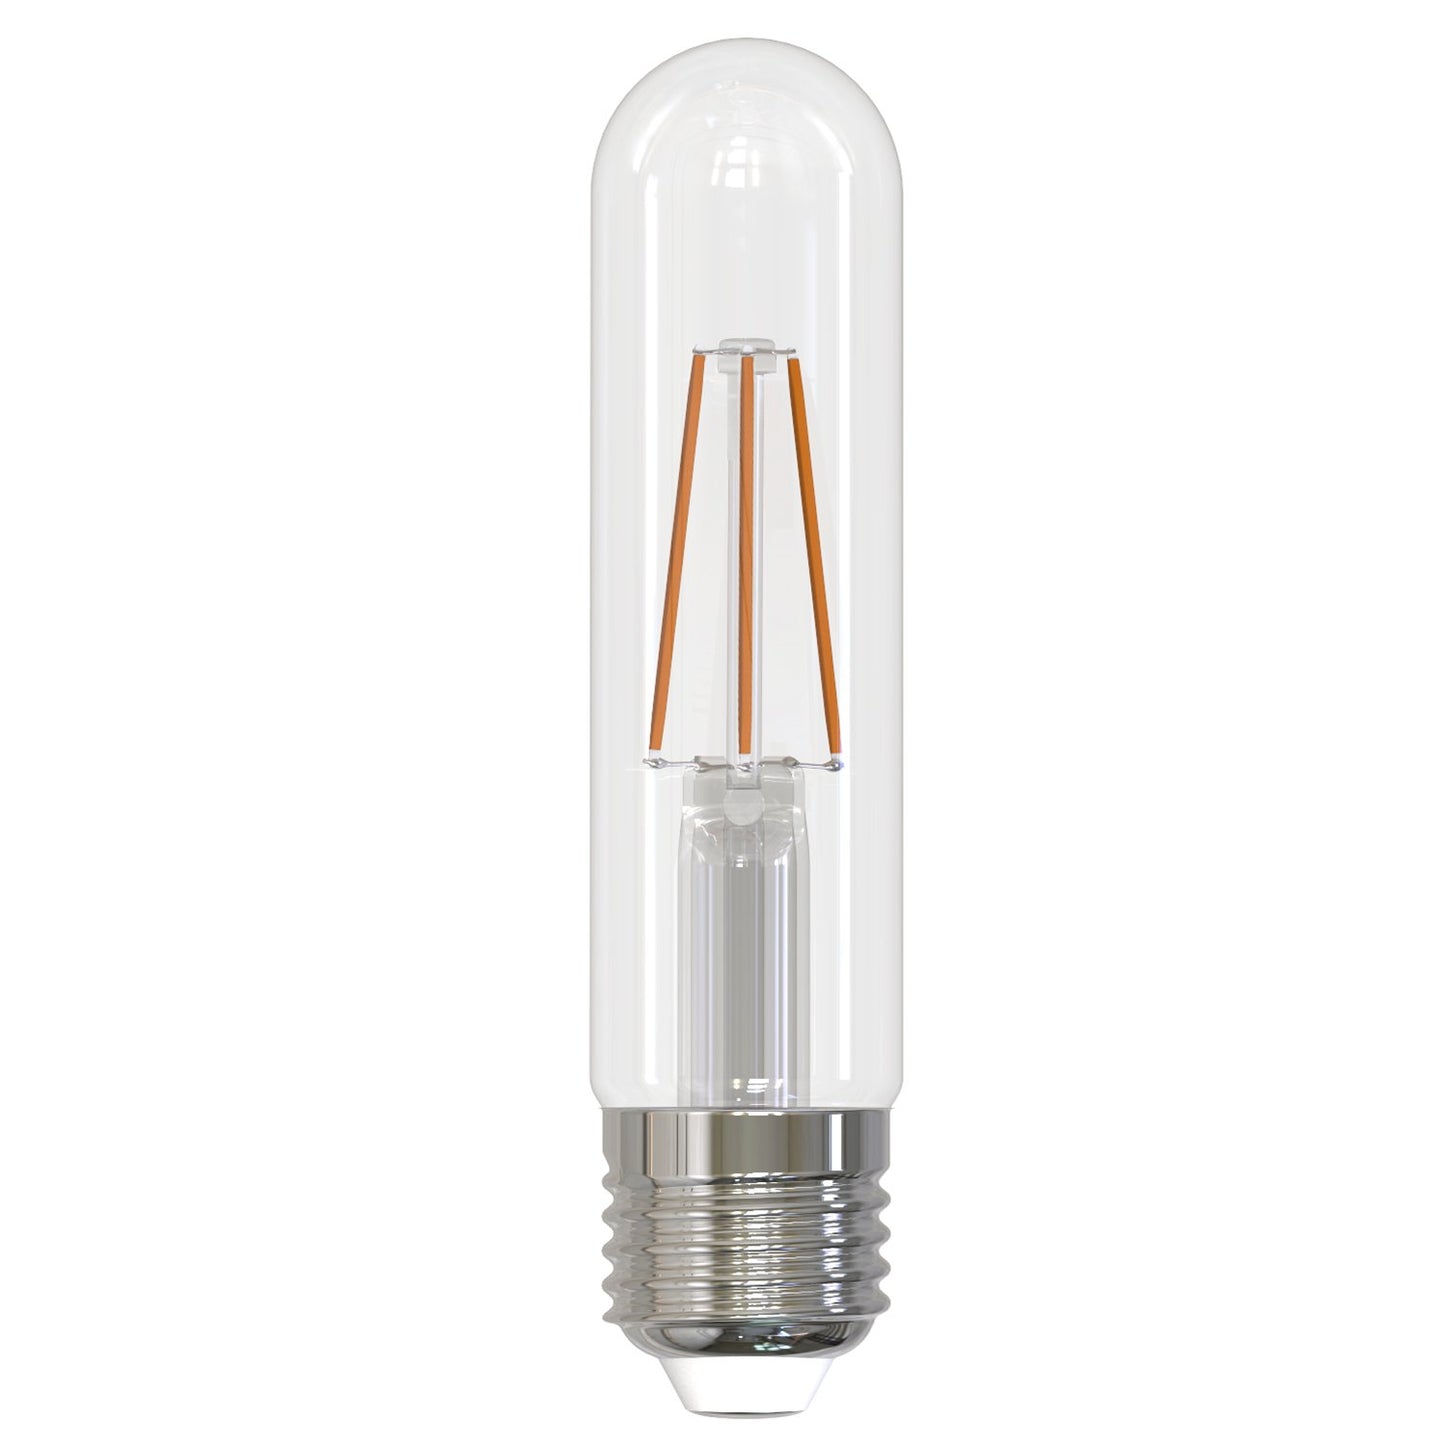 BULBRITE LED T9 MEDIUM SCREW (E26) 5W DIMMABLE CLEAR LIGHT BULB 3000K/SOFT WHITE LIGHT 40W EQUIVALENT 2PK (776892)